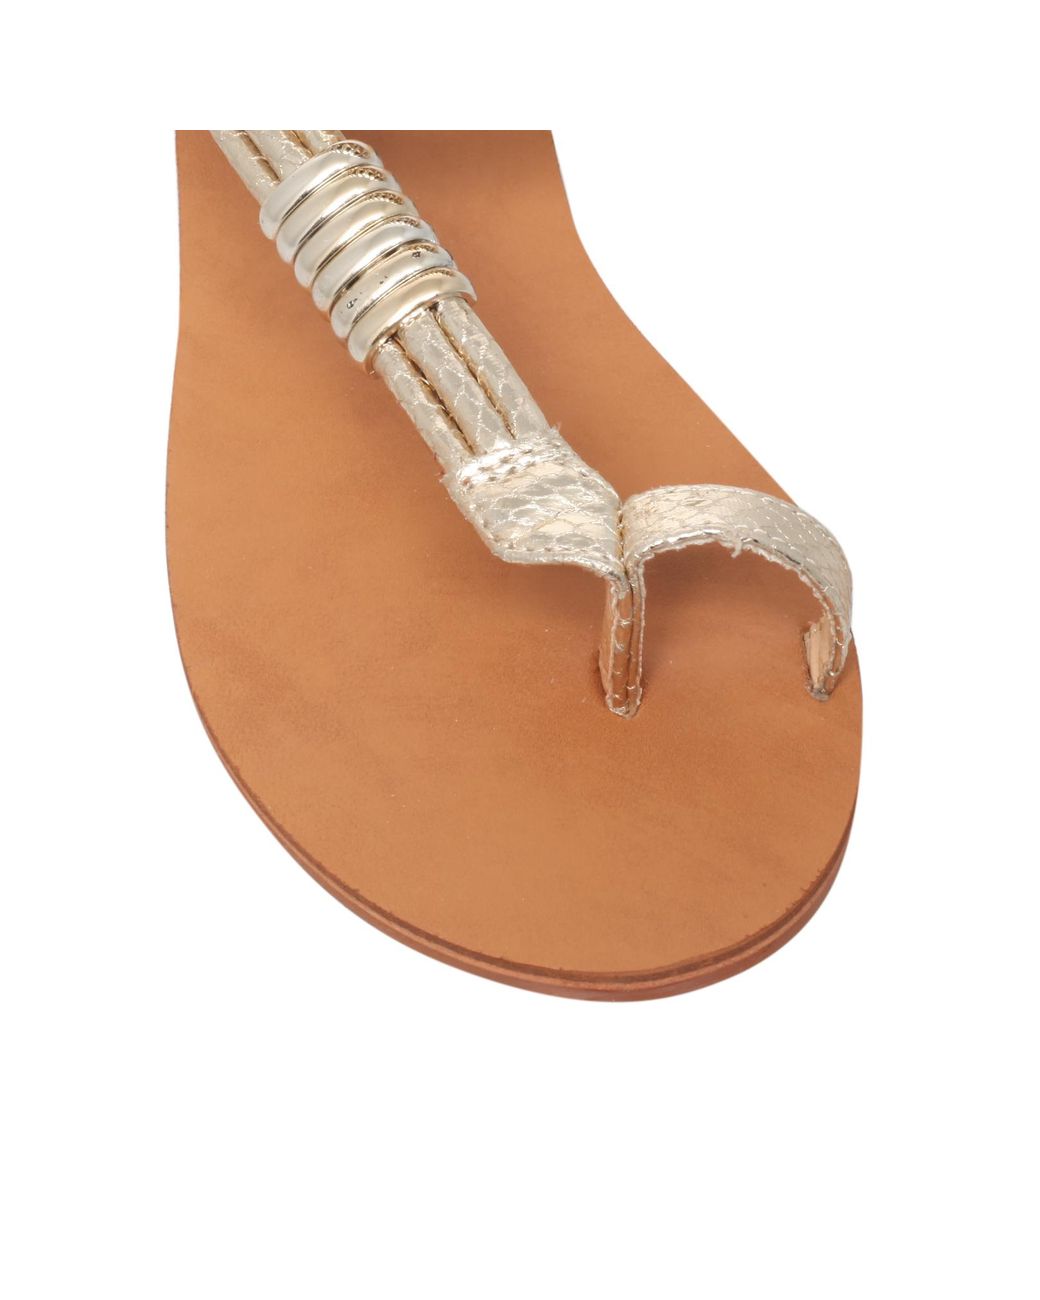 Carvela Kurt Geiger Klipper Flat Sandals in Metallic | Lyst UK